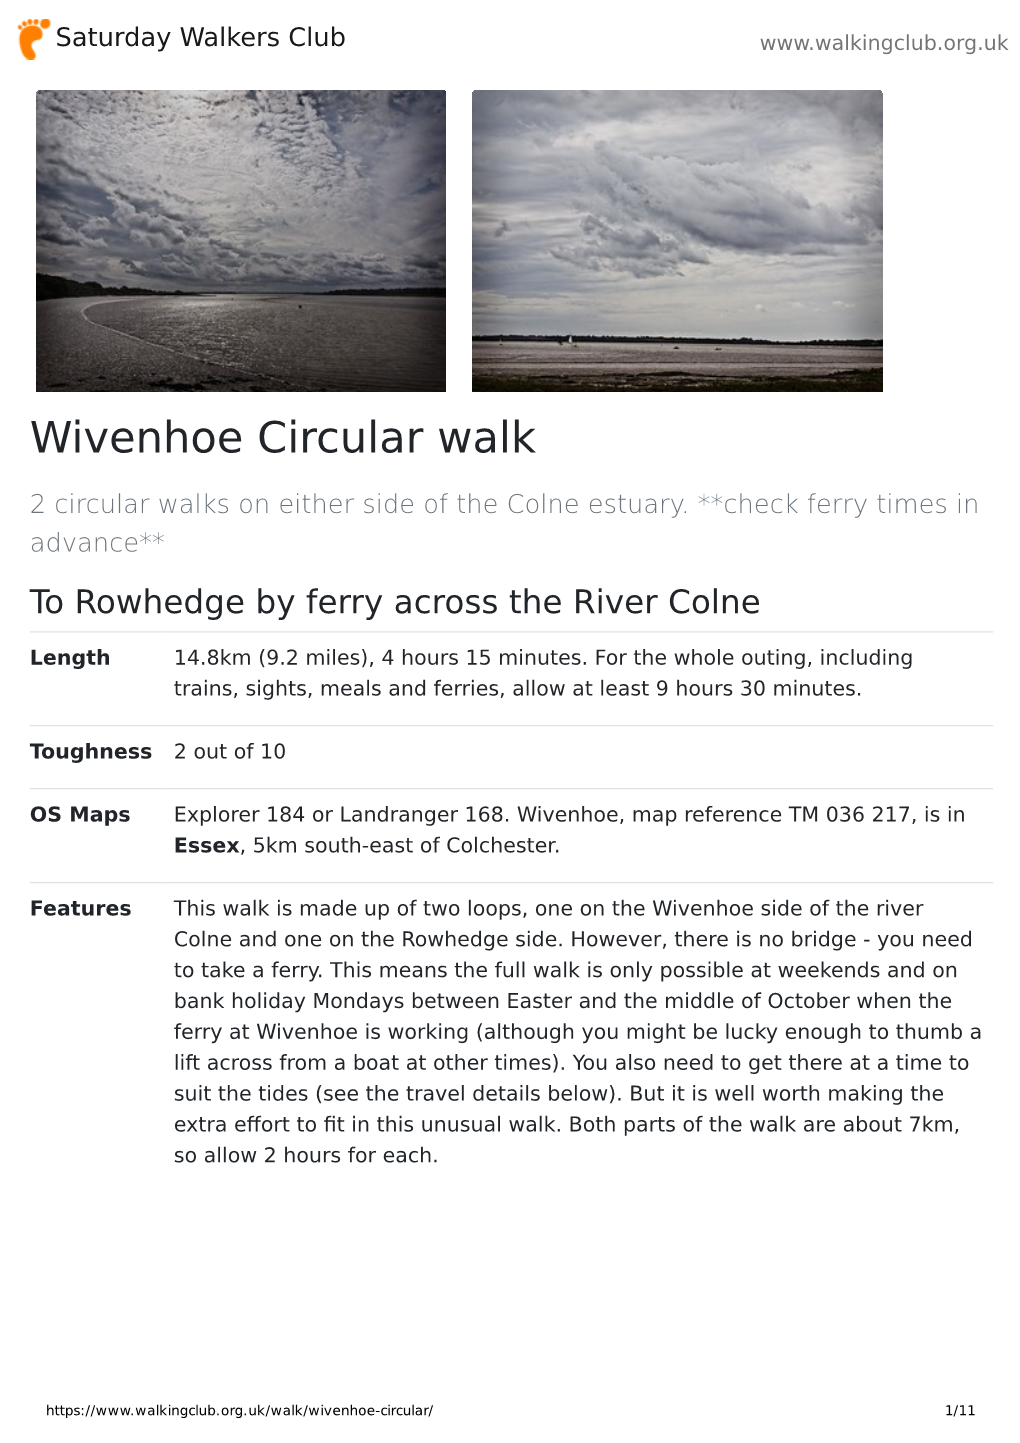 Wivenhoe Circular Walk